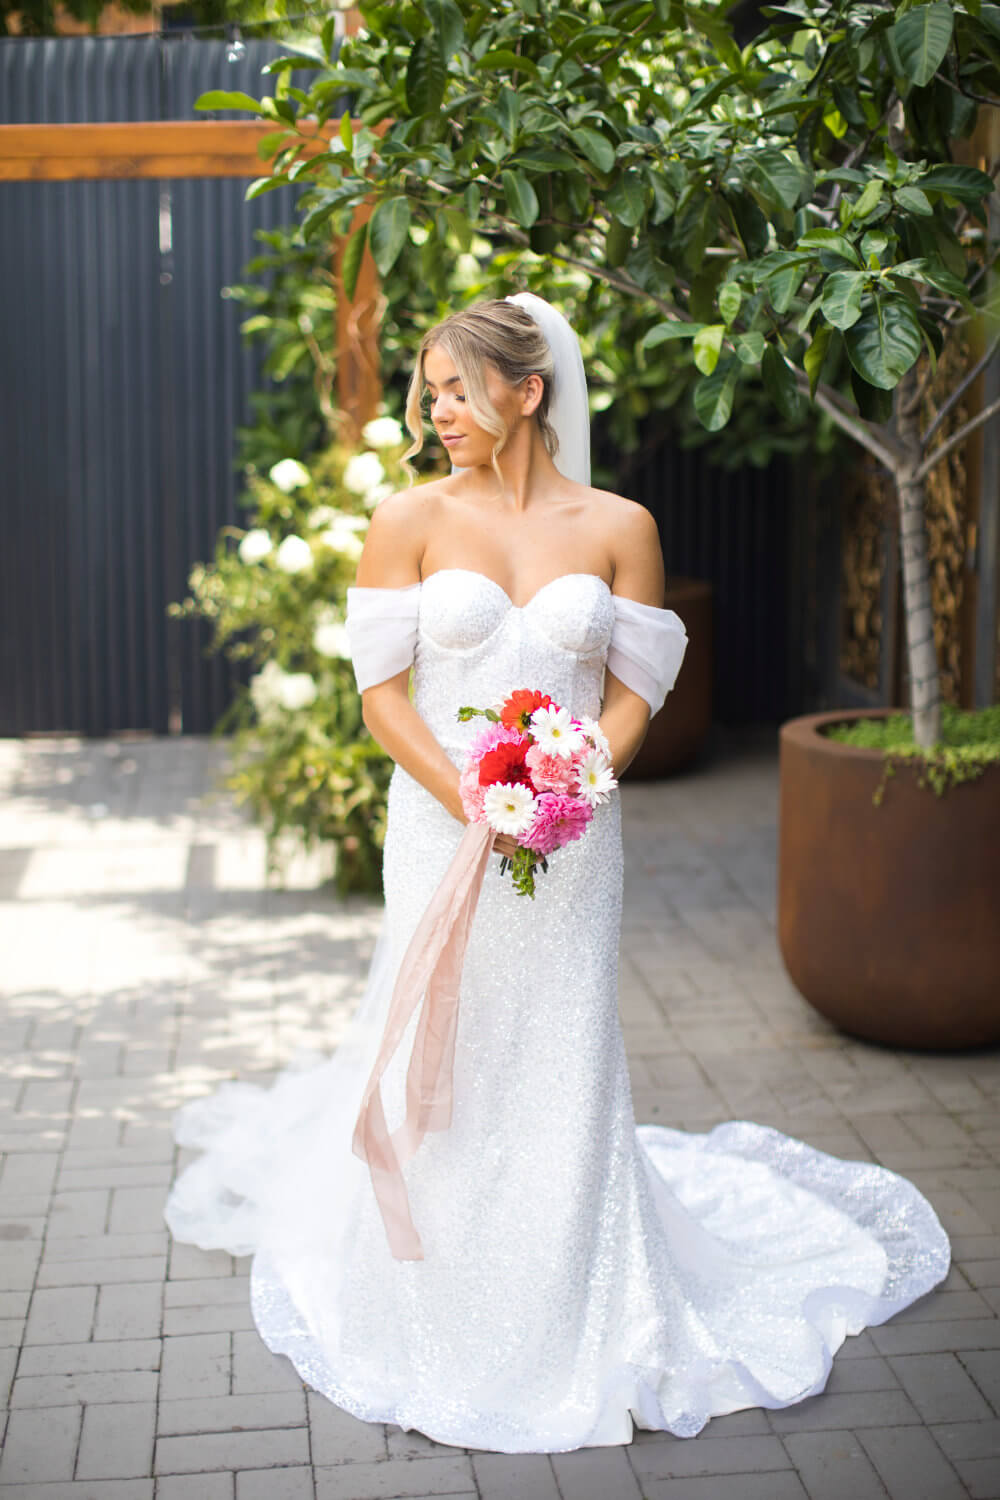 Wedding Stylist Brisbane Event Florist Samuel Parke Photography Melanie Jane Weddings and Events